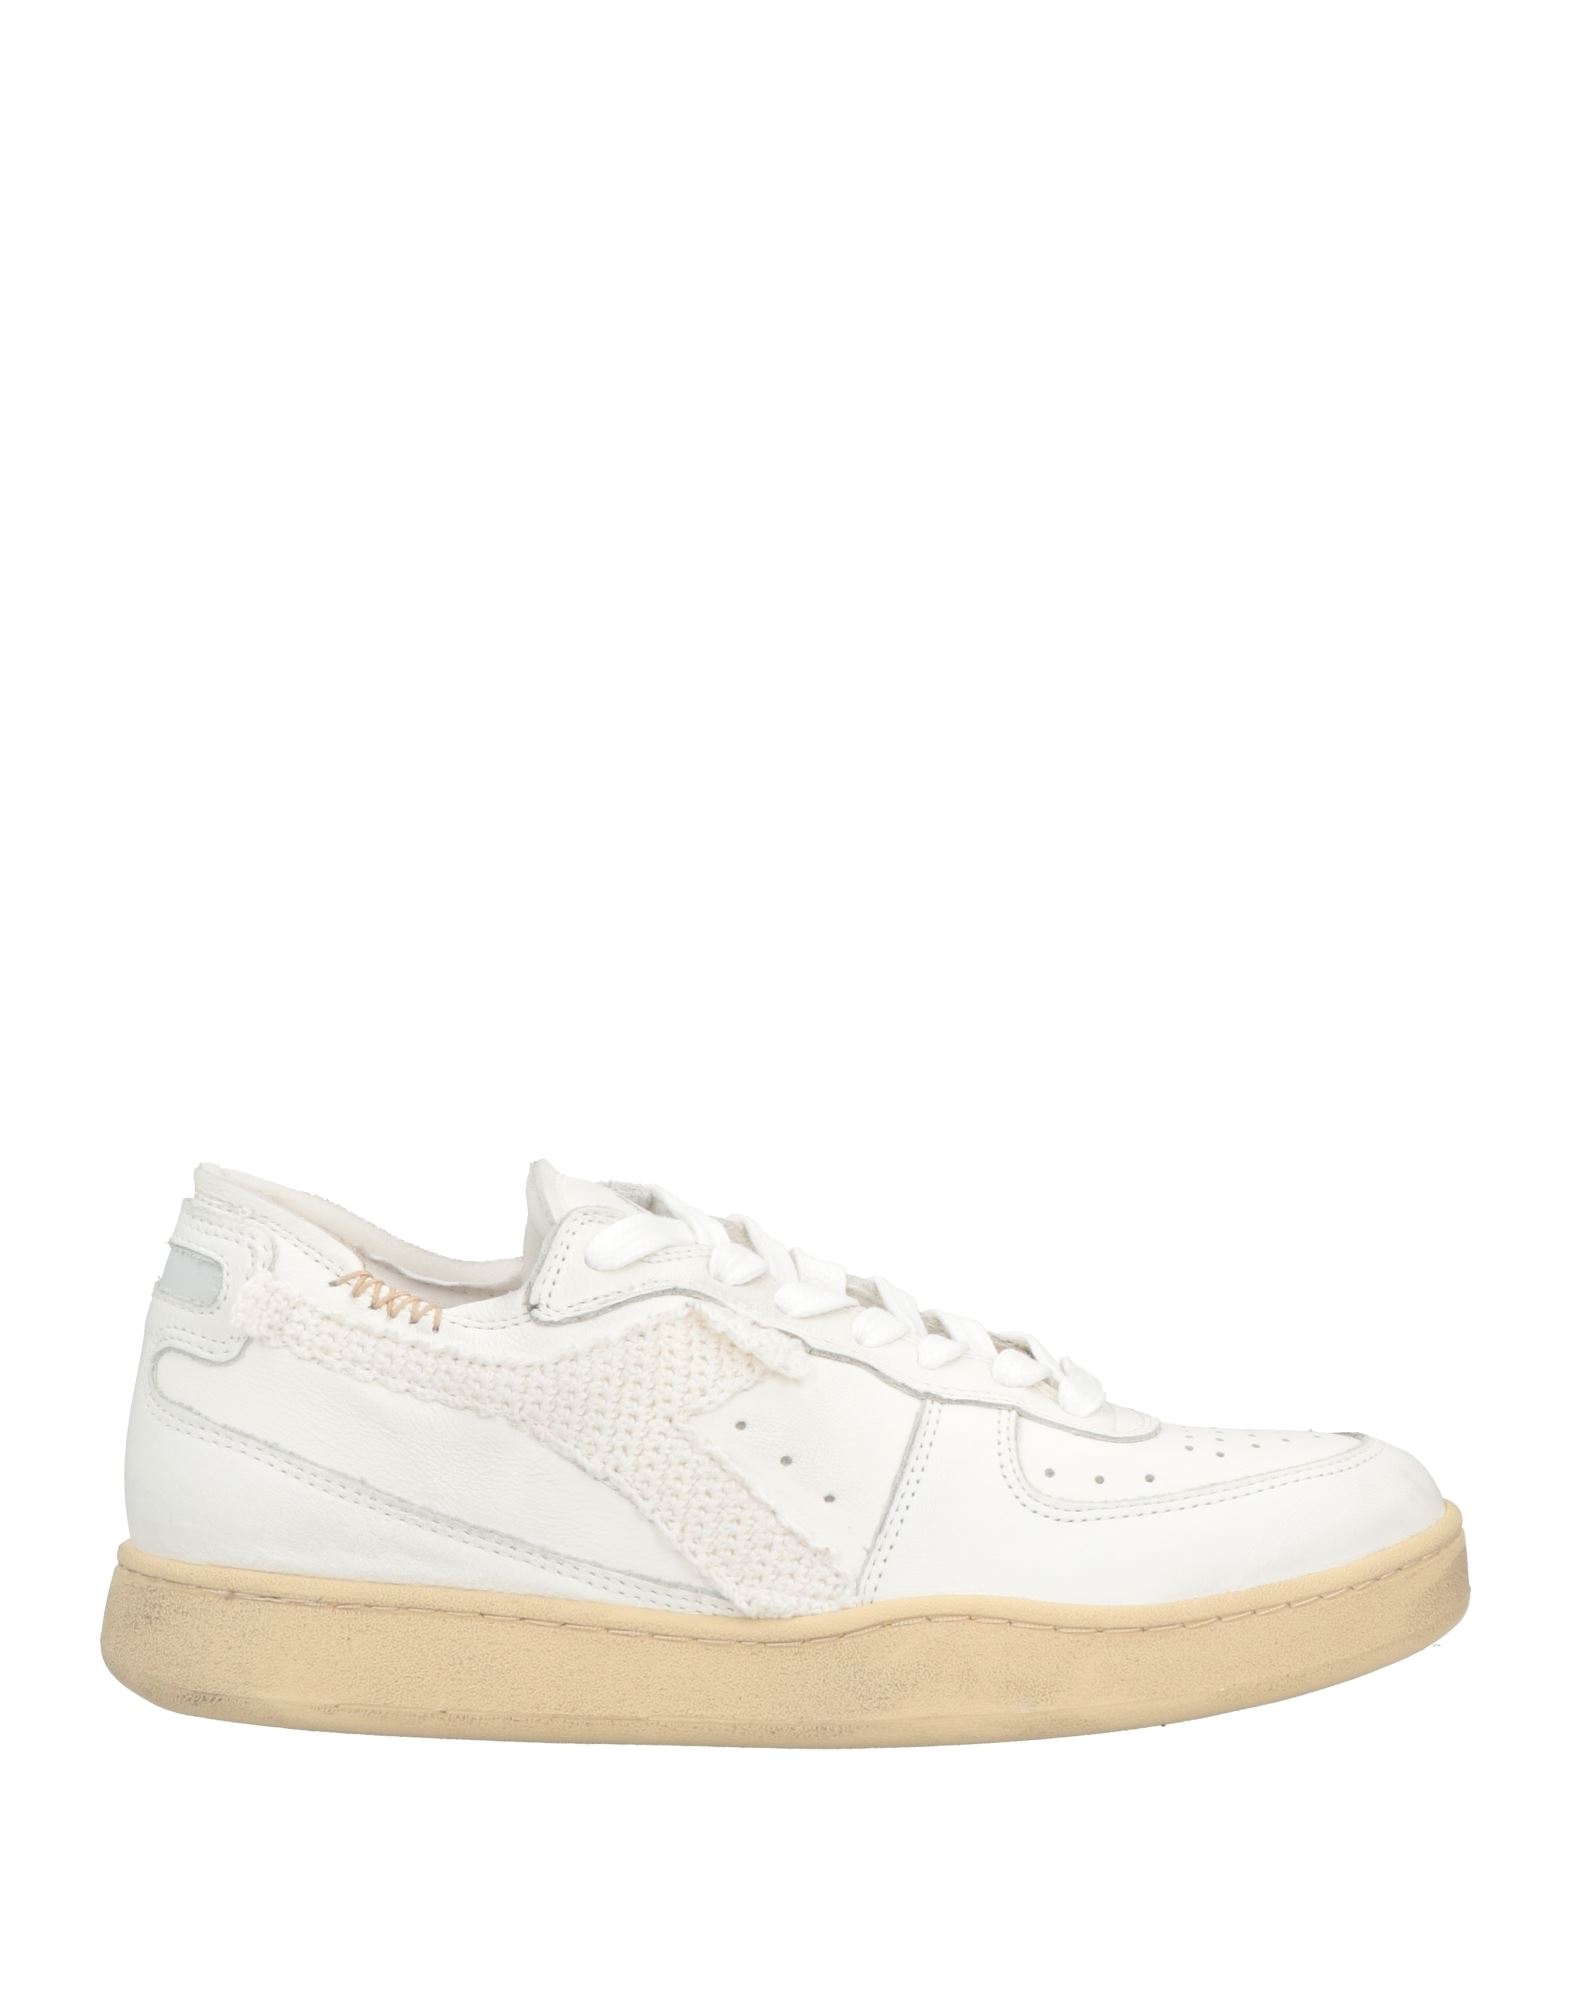 Shop Diadora Heritage Woman Sneakers White Size 5.5 Soft Leather